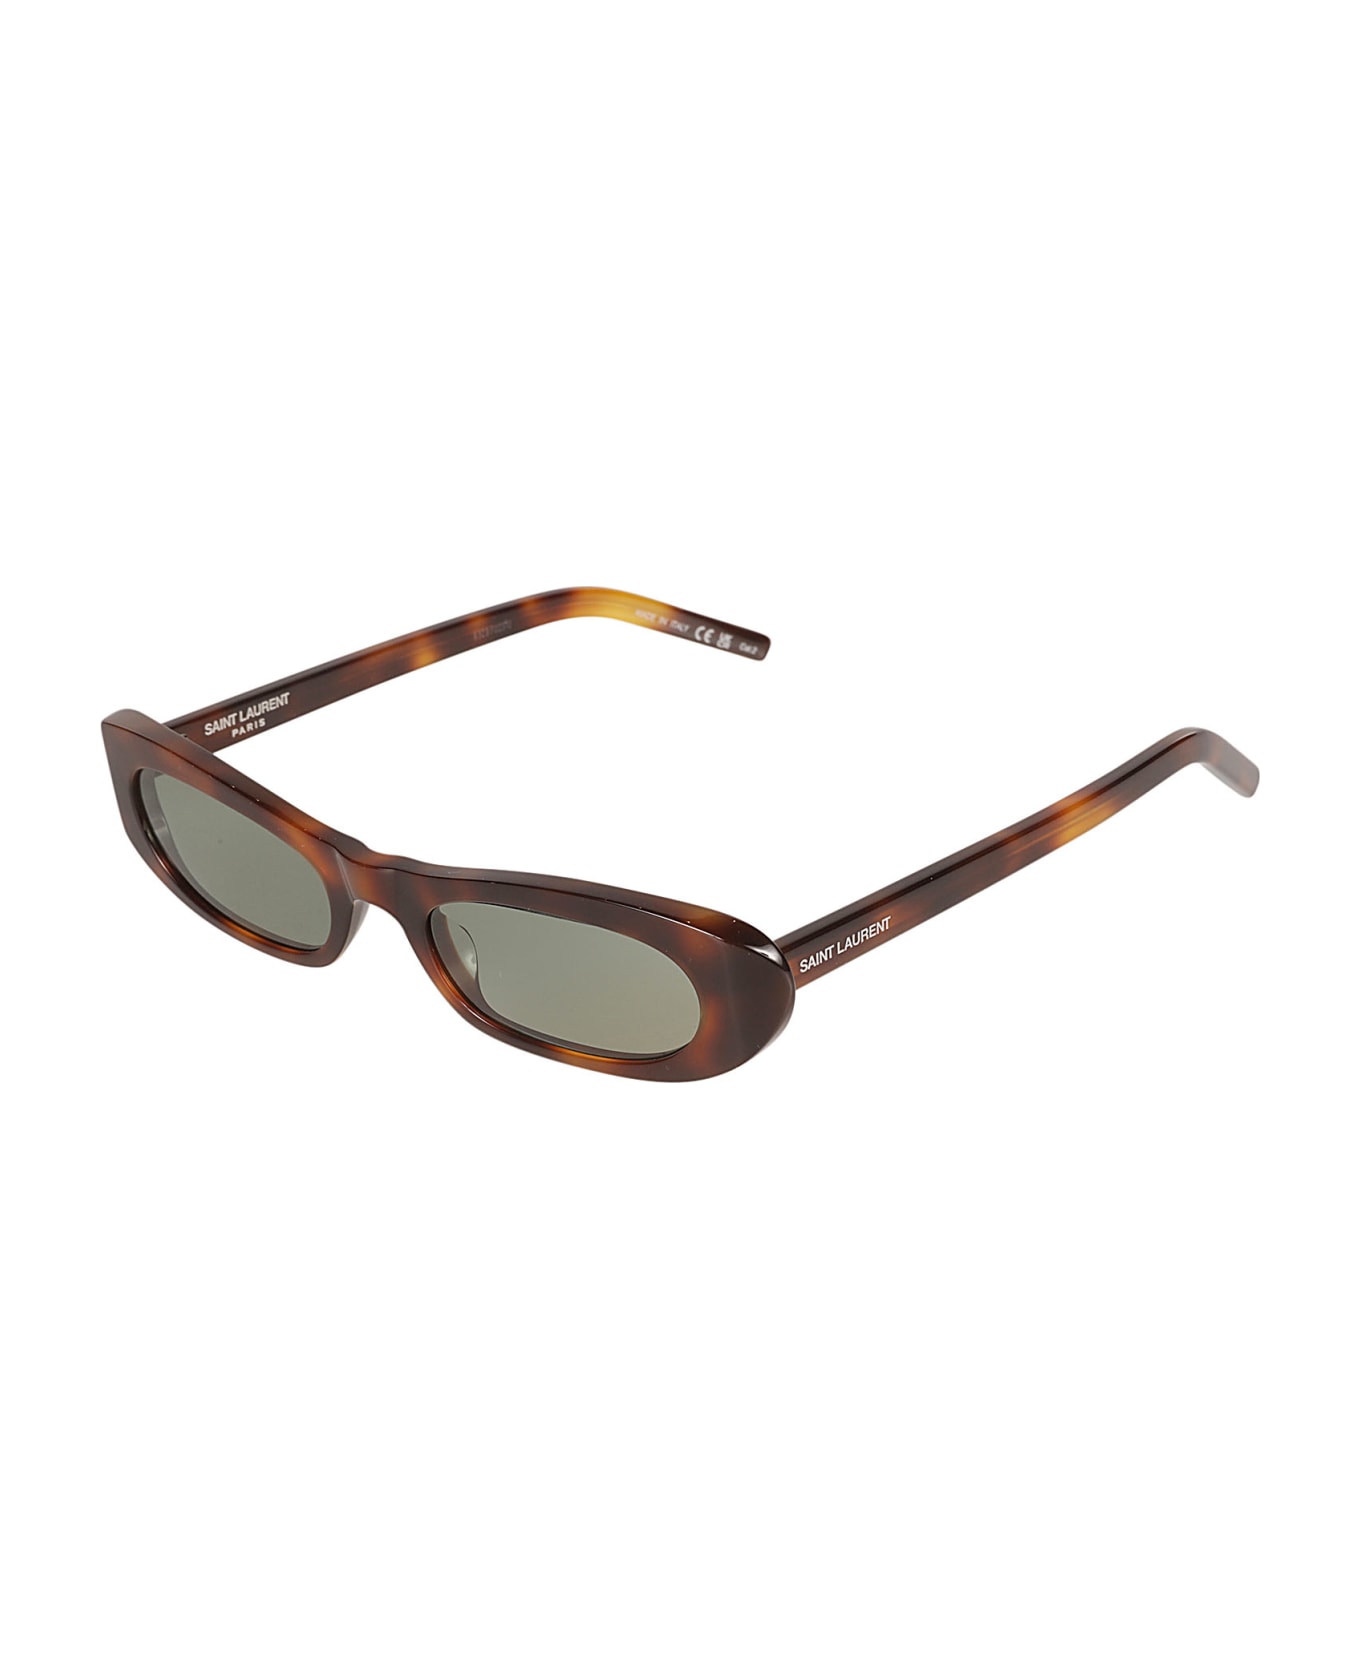 Saint Laurent Eyewear Oval Frame Flame Effect Sunglasses - Havana/Green